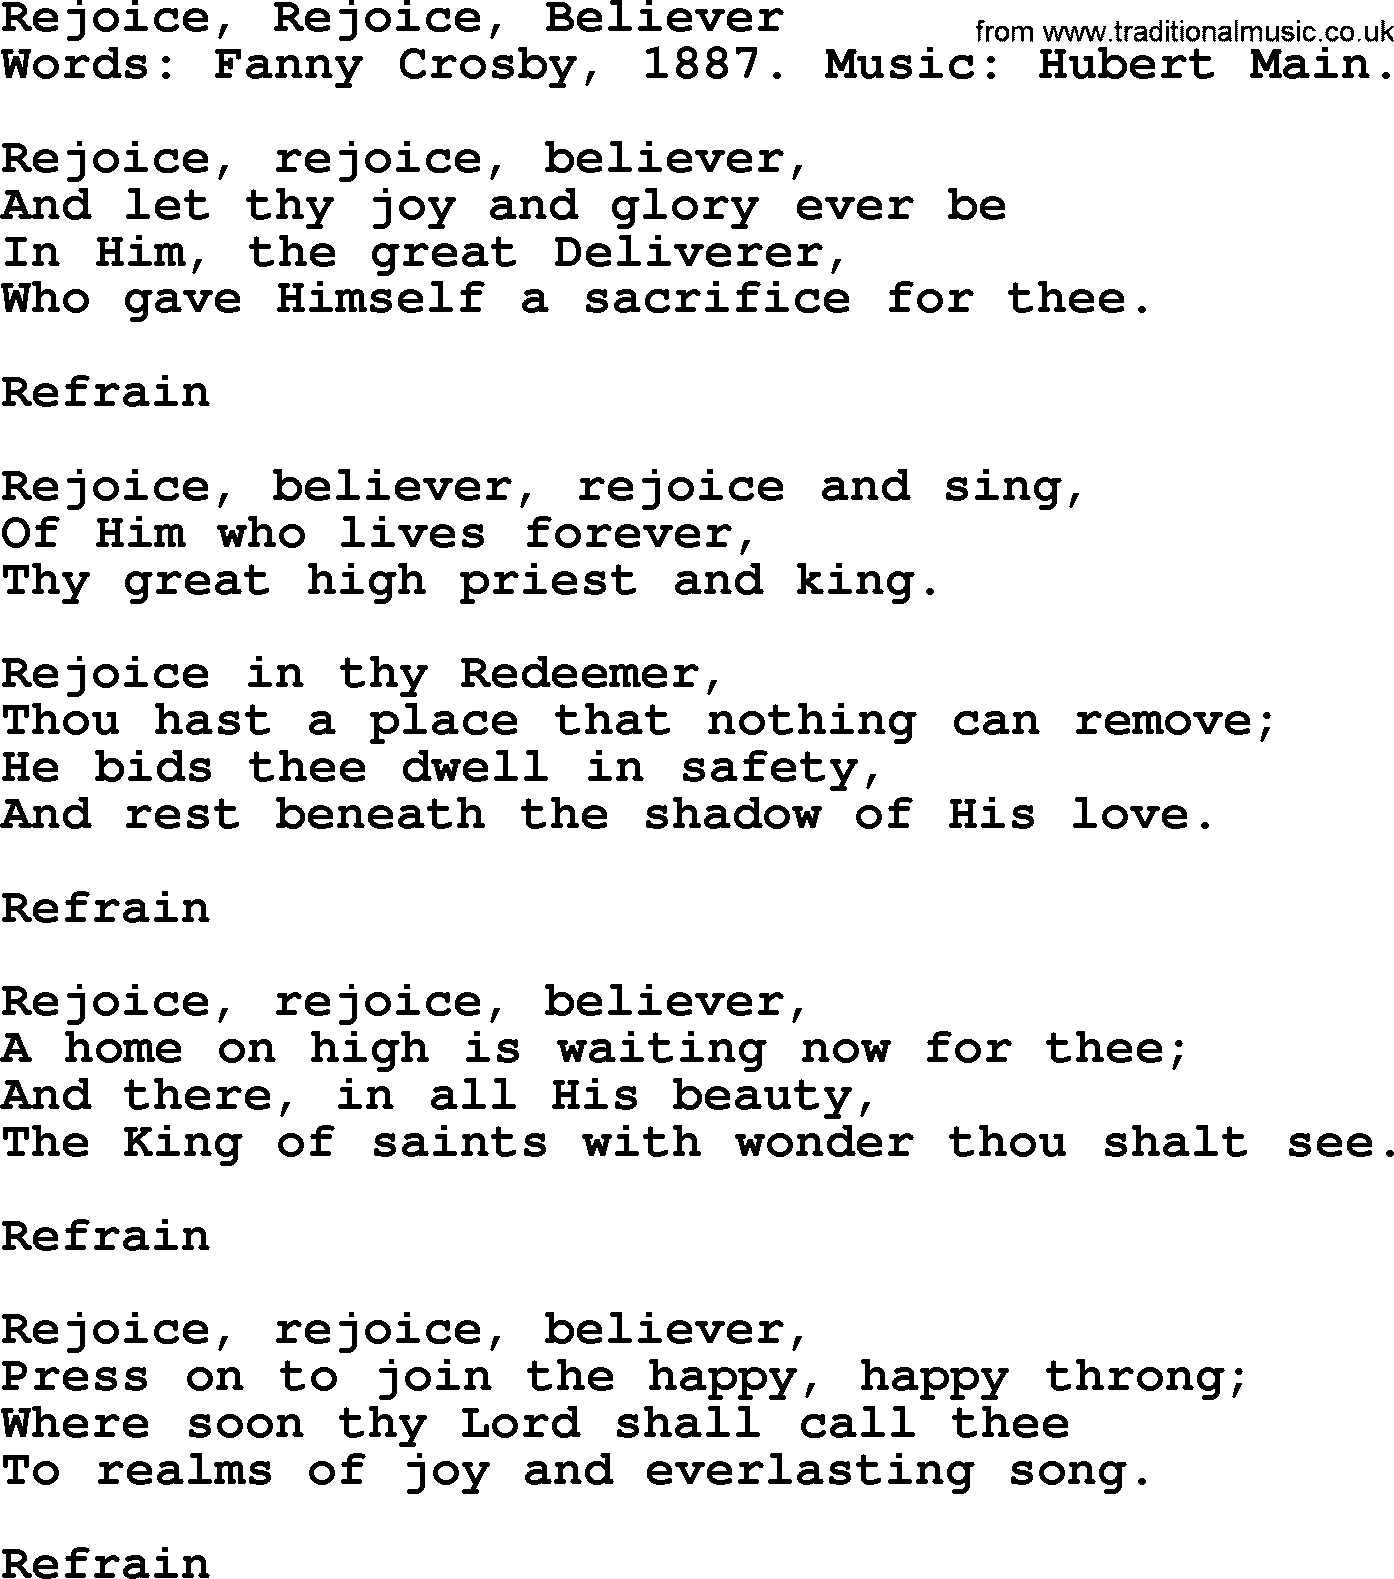 Fanny Crosby song: Rejoice, Rejoice, Believer, lyrics